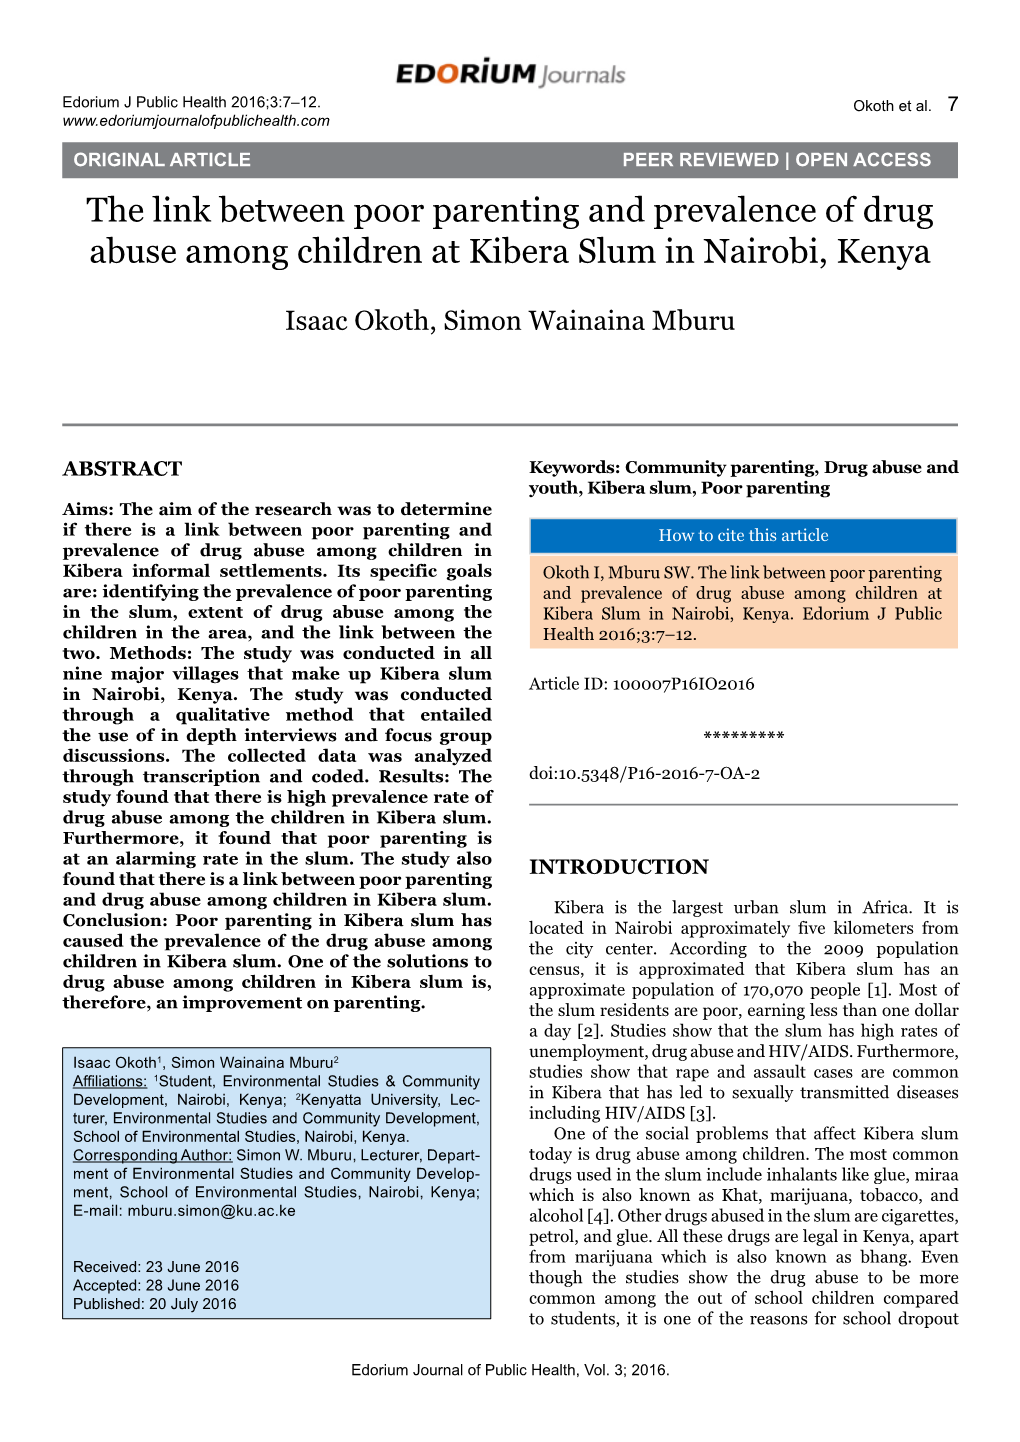 The Link Between Poor Parenting and Prevalence of Drug Abuse Among Children at Kibera Slum in Nairobi, Kenya